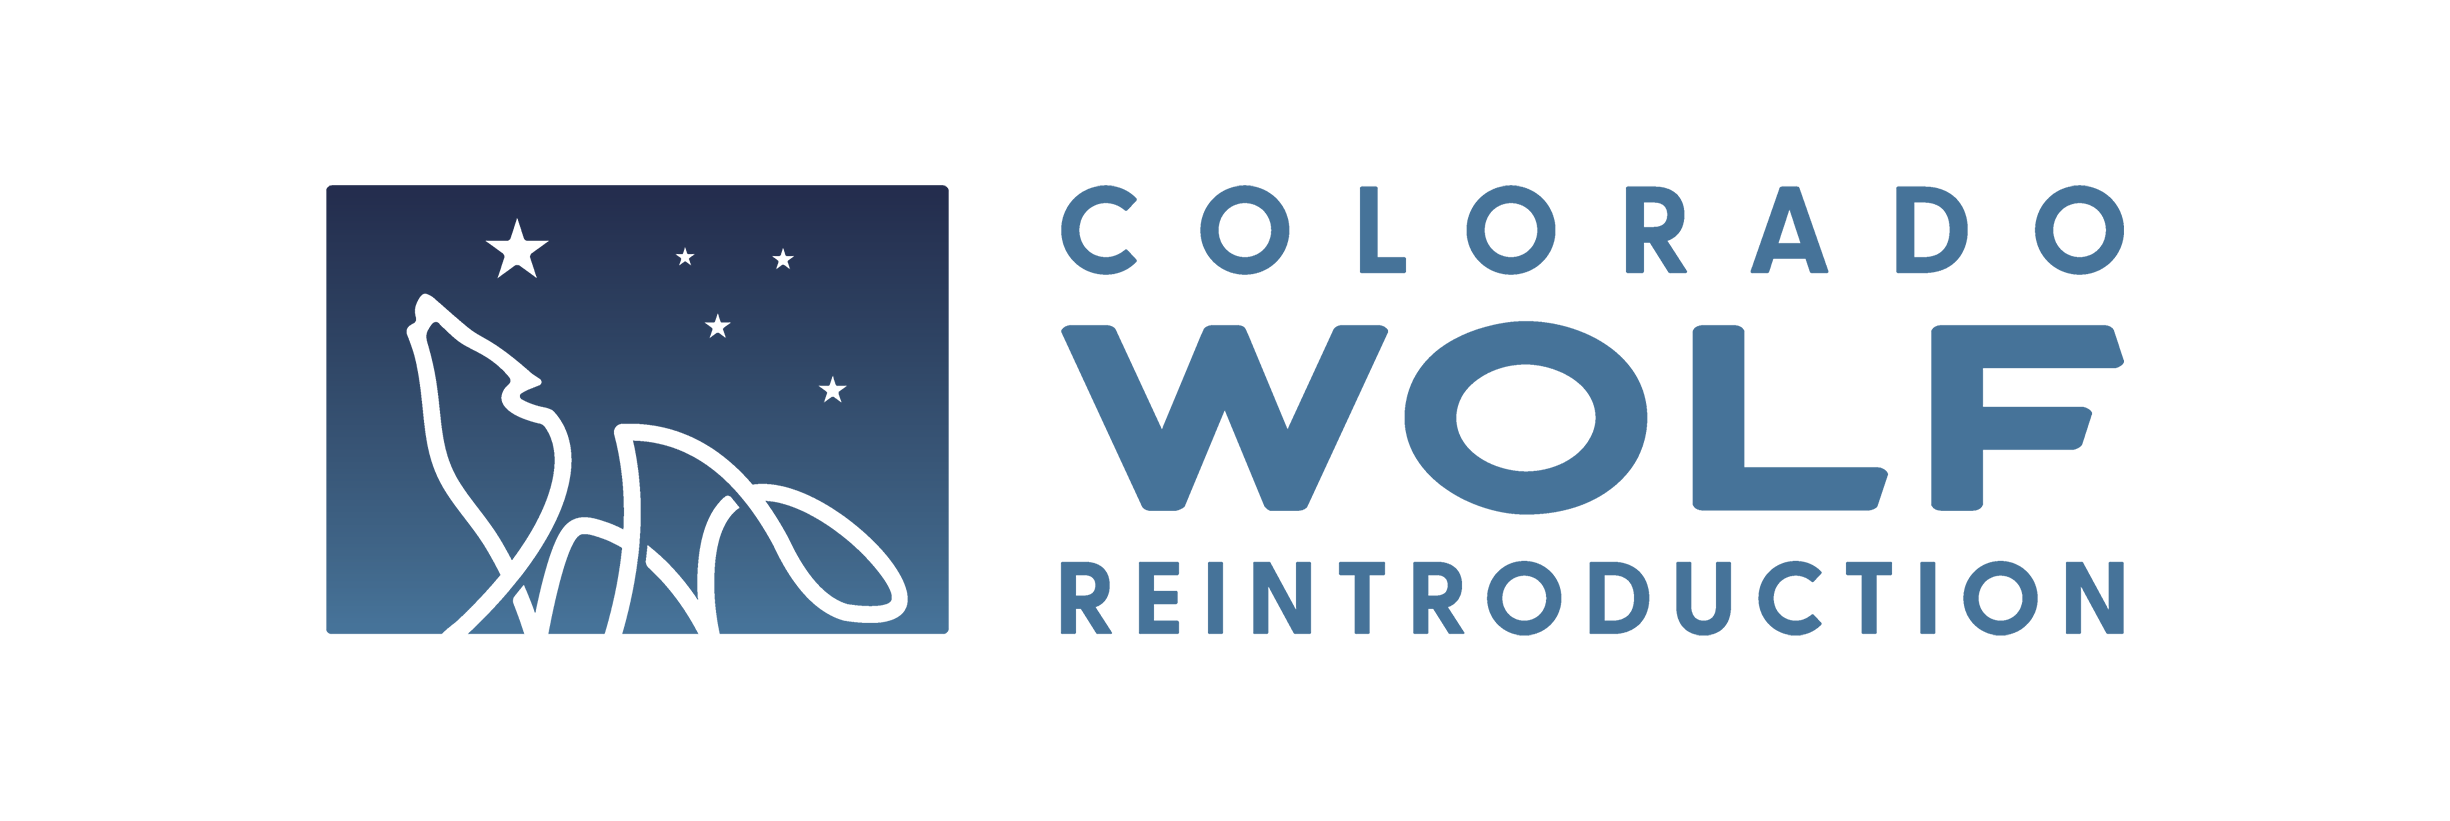 Colorado Wolf Reintroduction